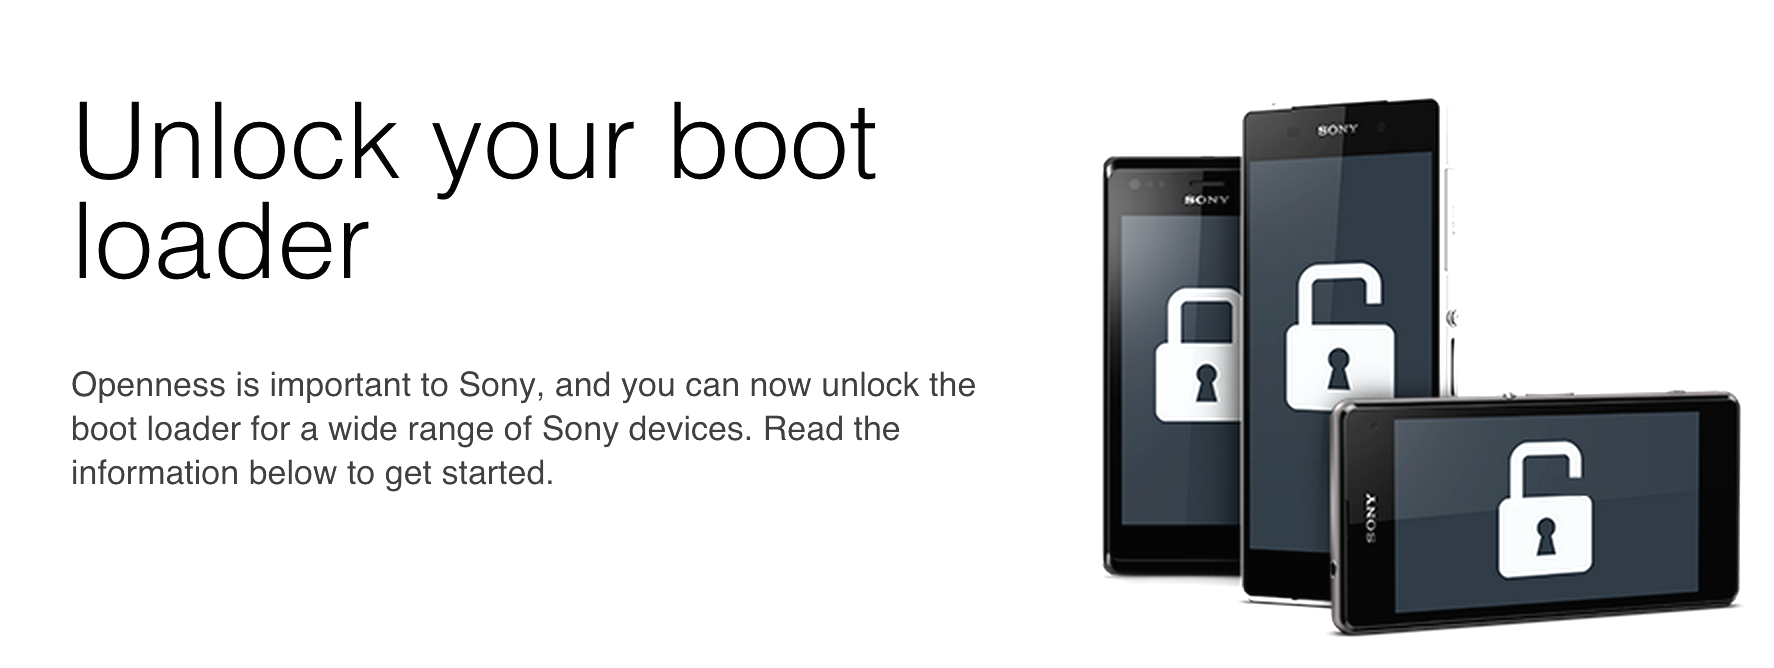 Sony warns unlocking Xperia Z3 bootloader will kill the camera’s low-light ...